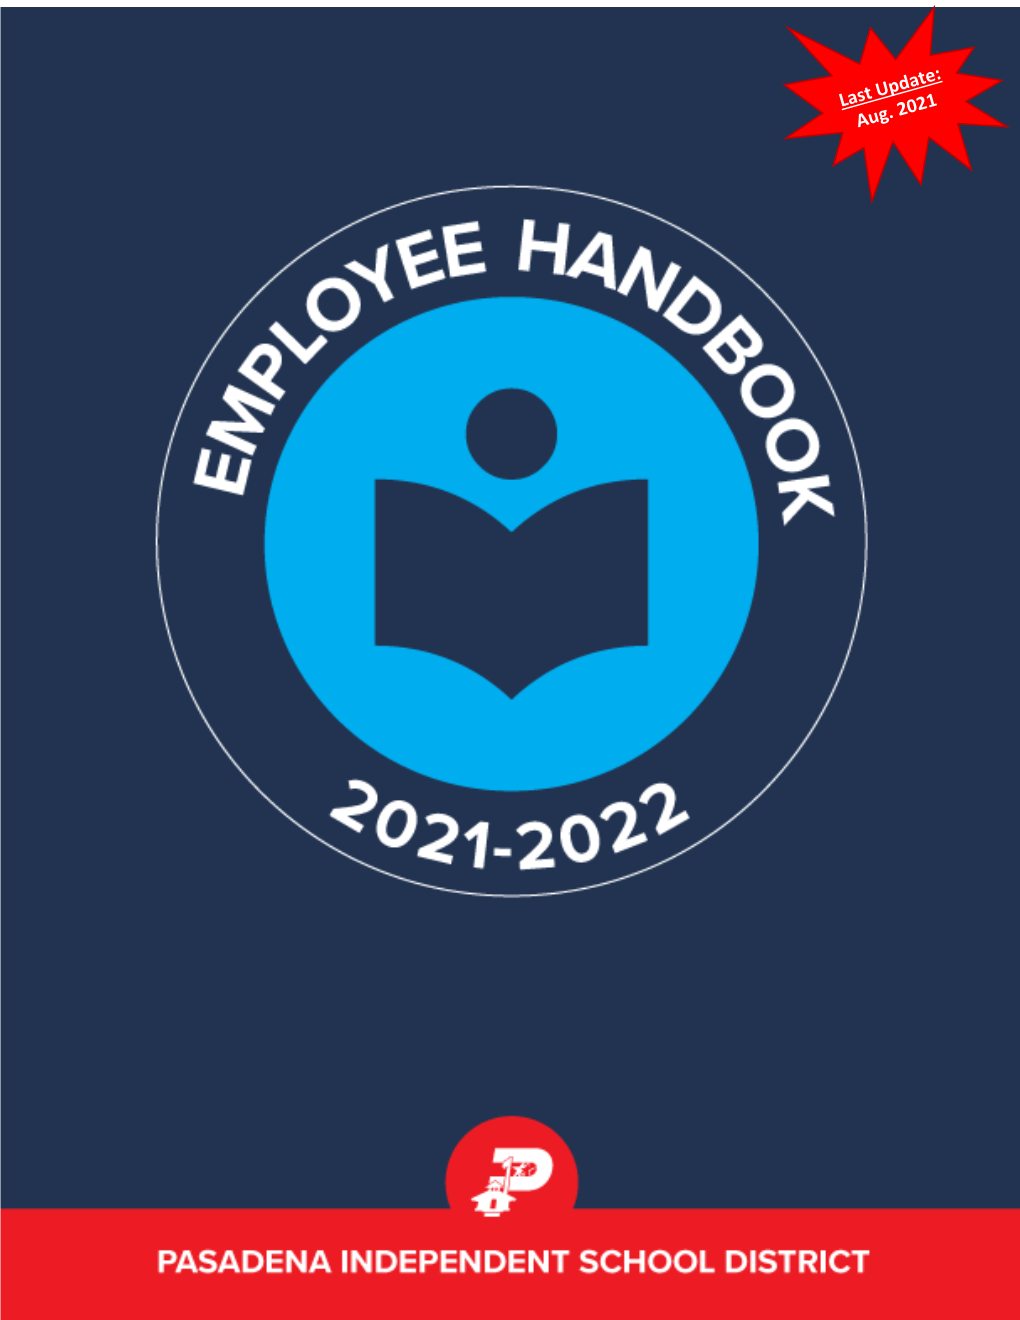 Employee Handbook Receipt